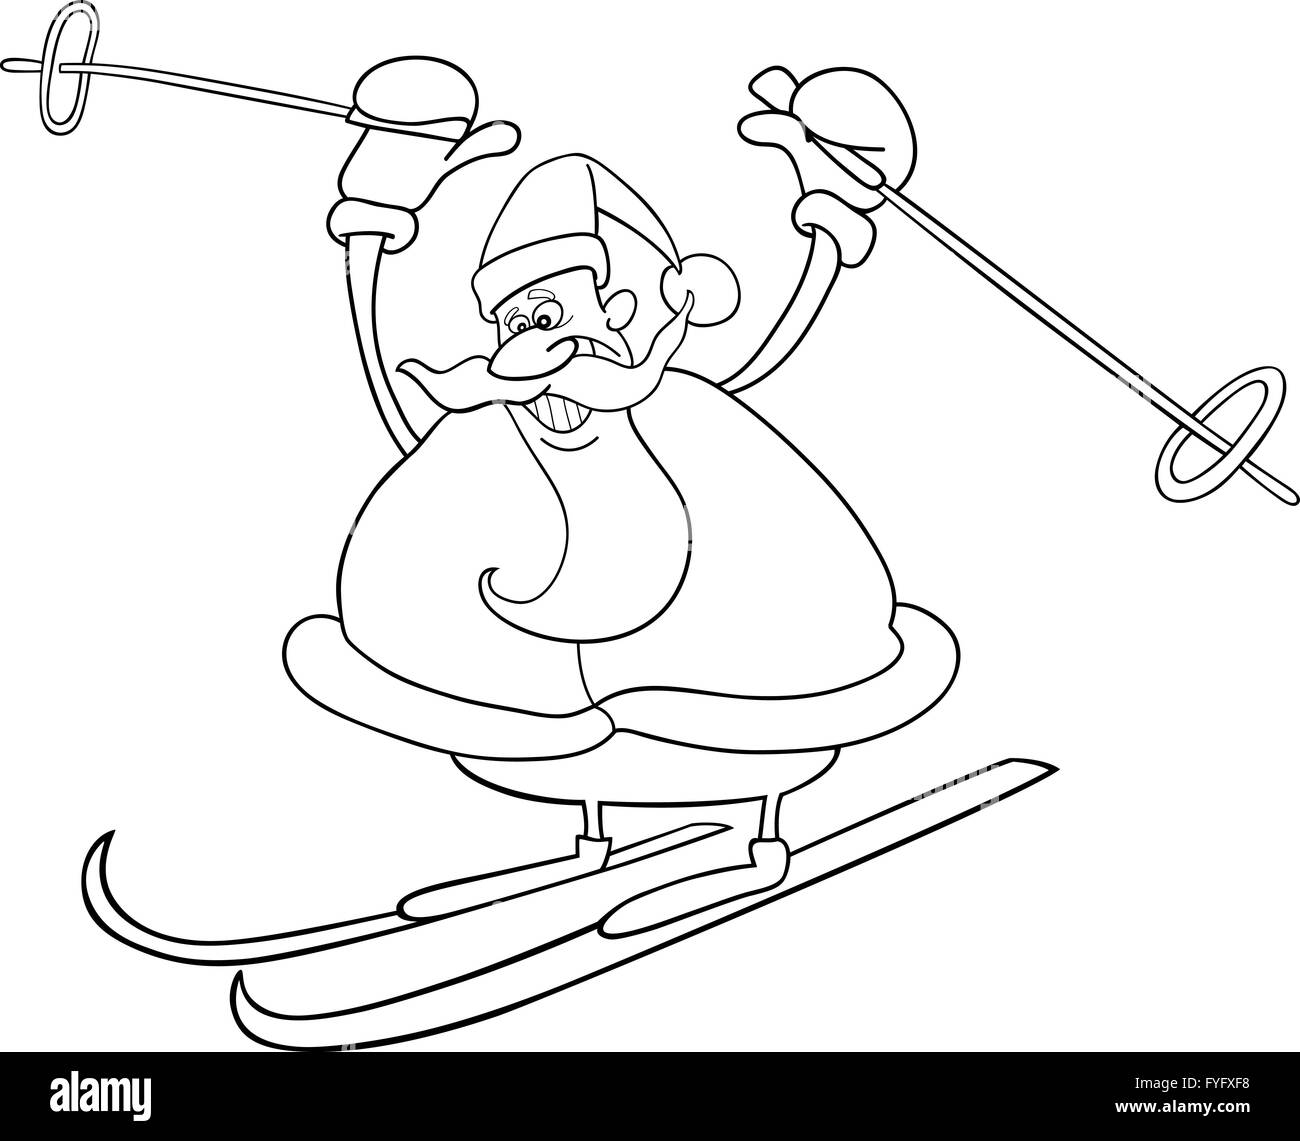 cartoon santa on ski for coloring book Stock Photo